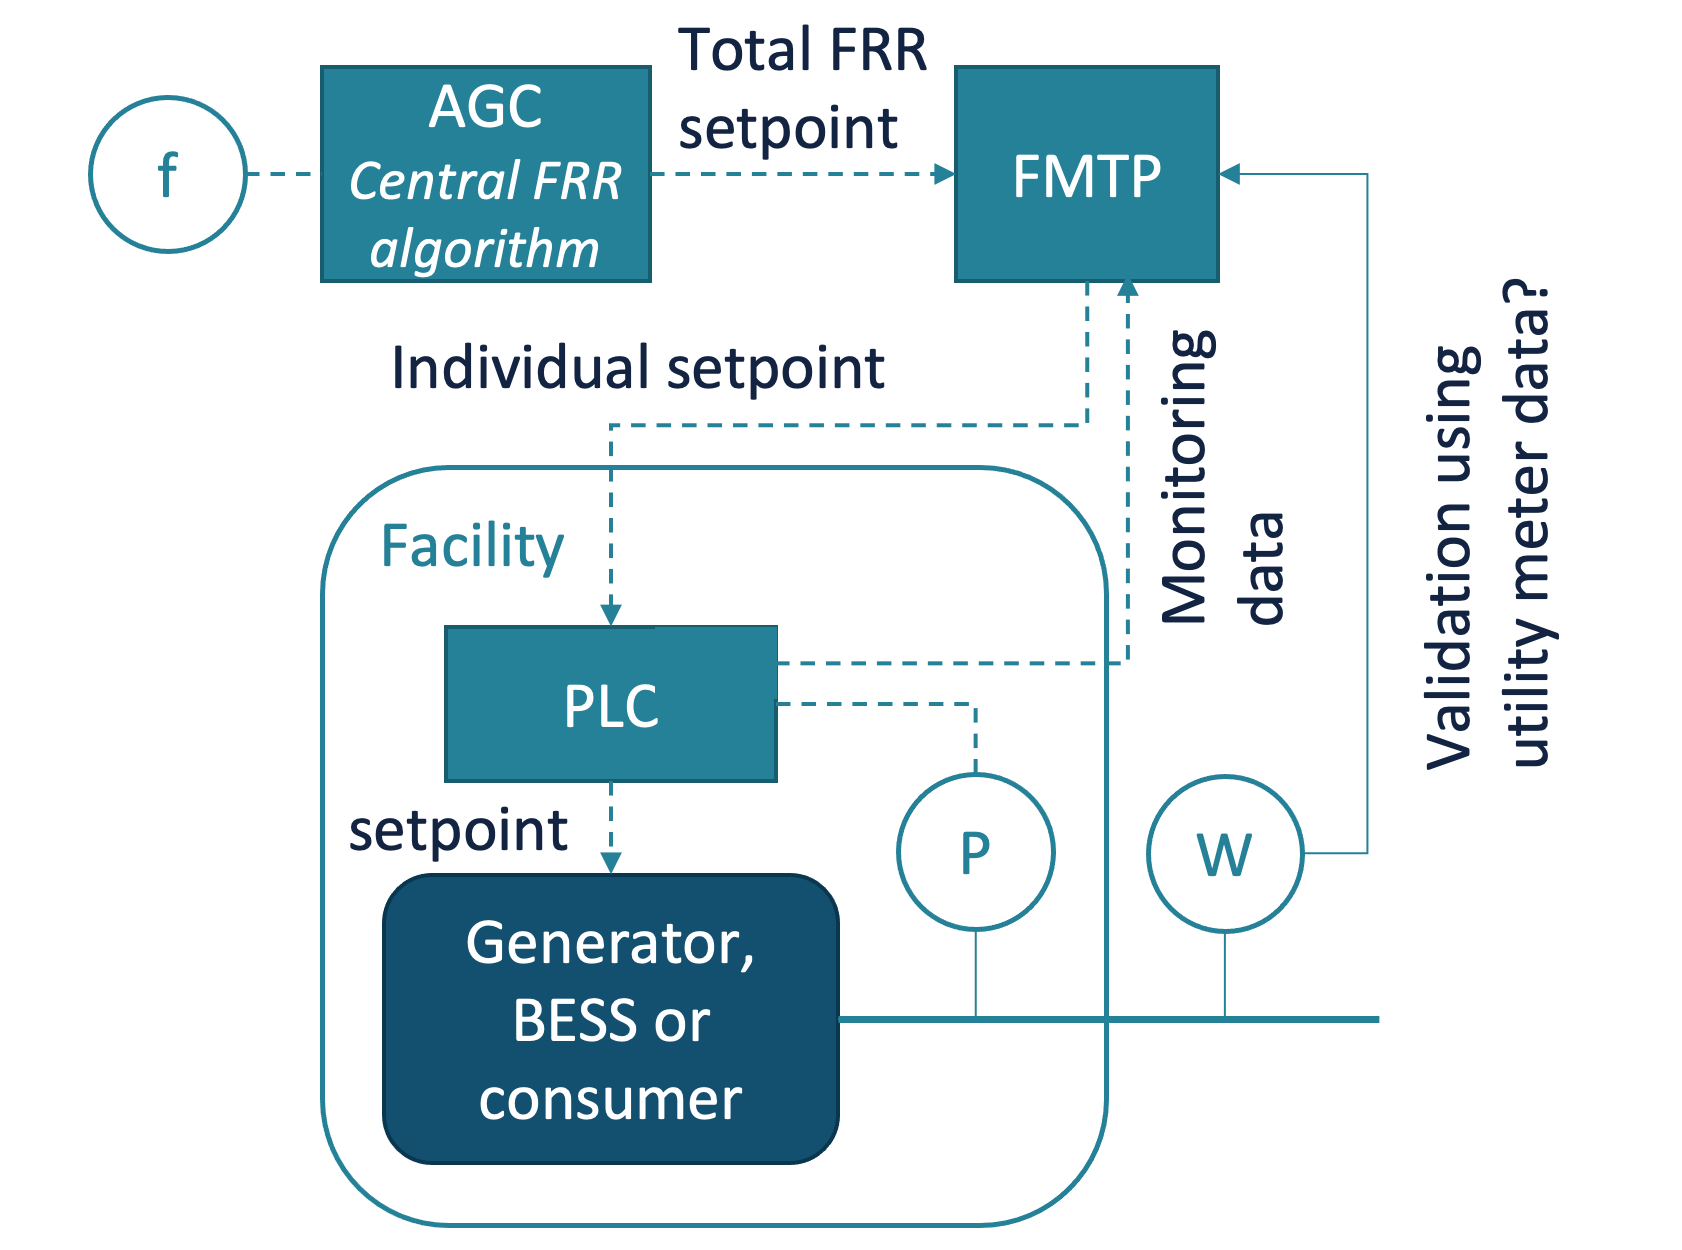 FRR achitecture overview